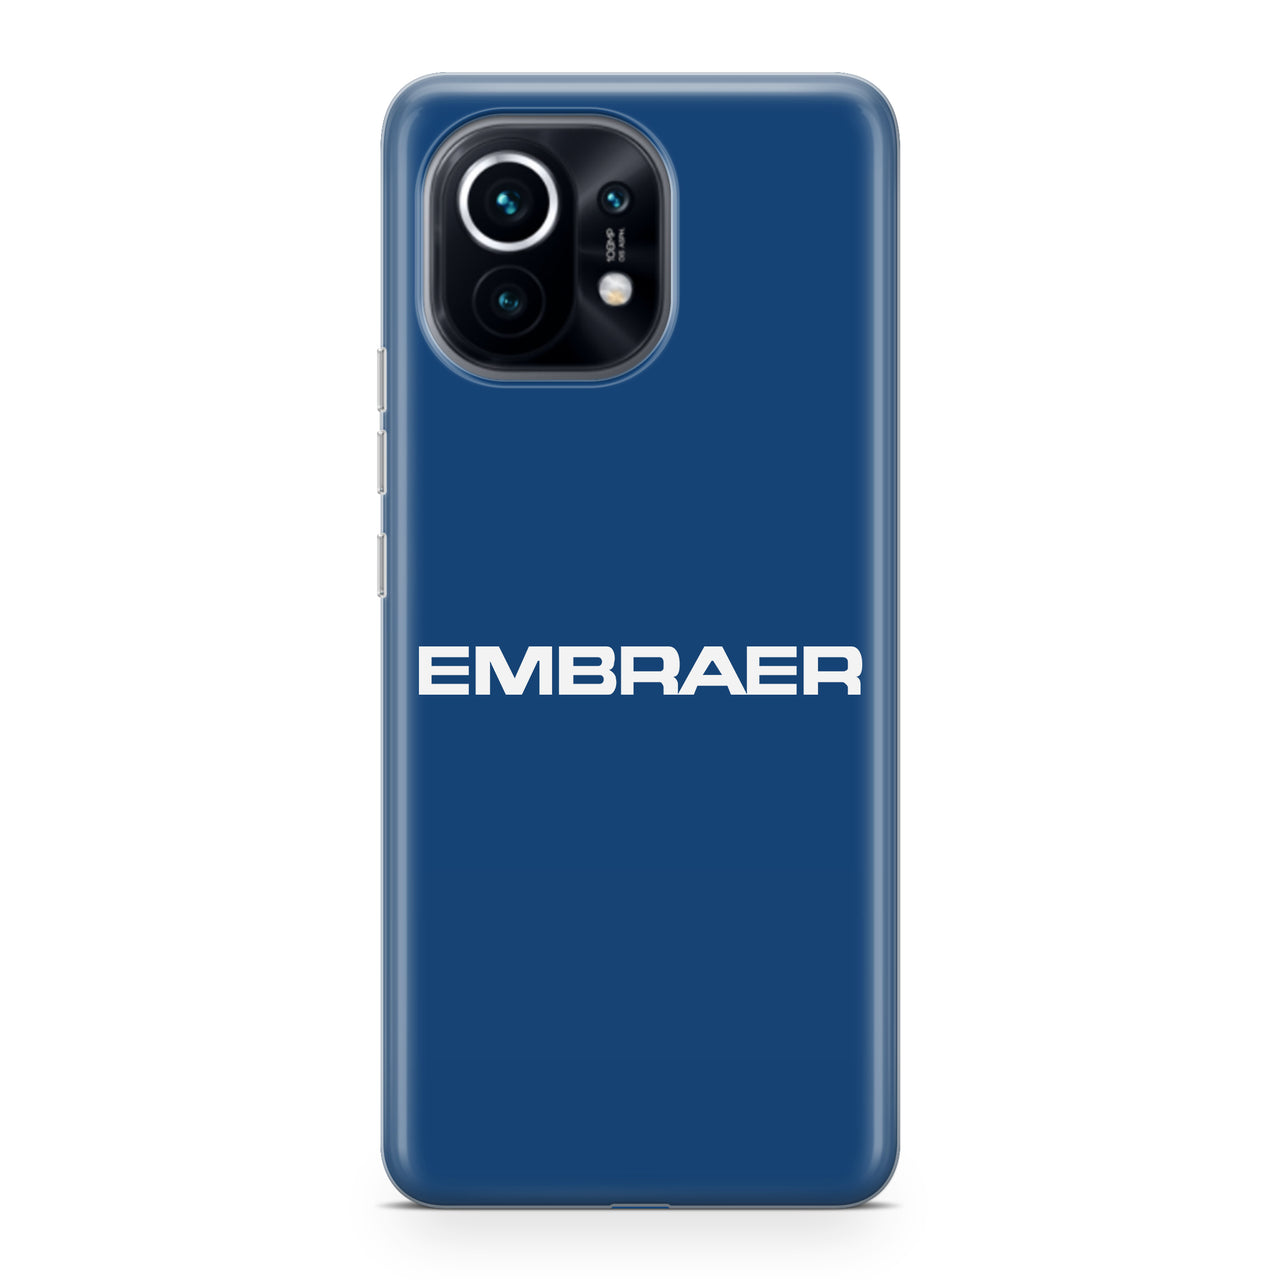 Embraer & Text Designed Xiaomi Cases